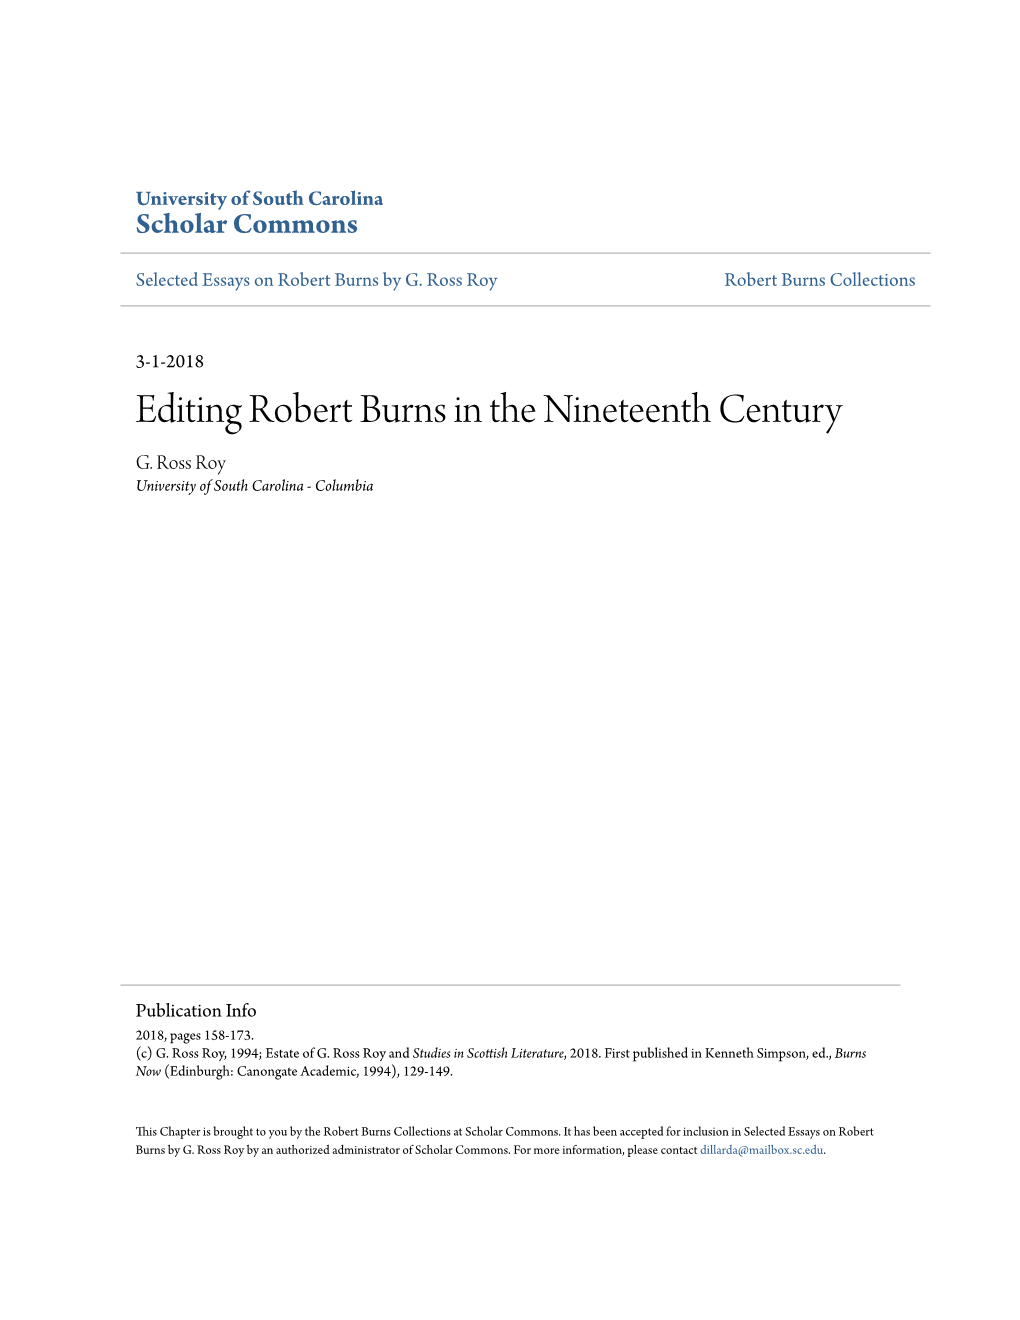 Editing Robert Burns in the Nineteenth Century G